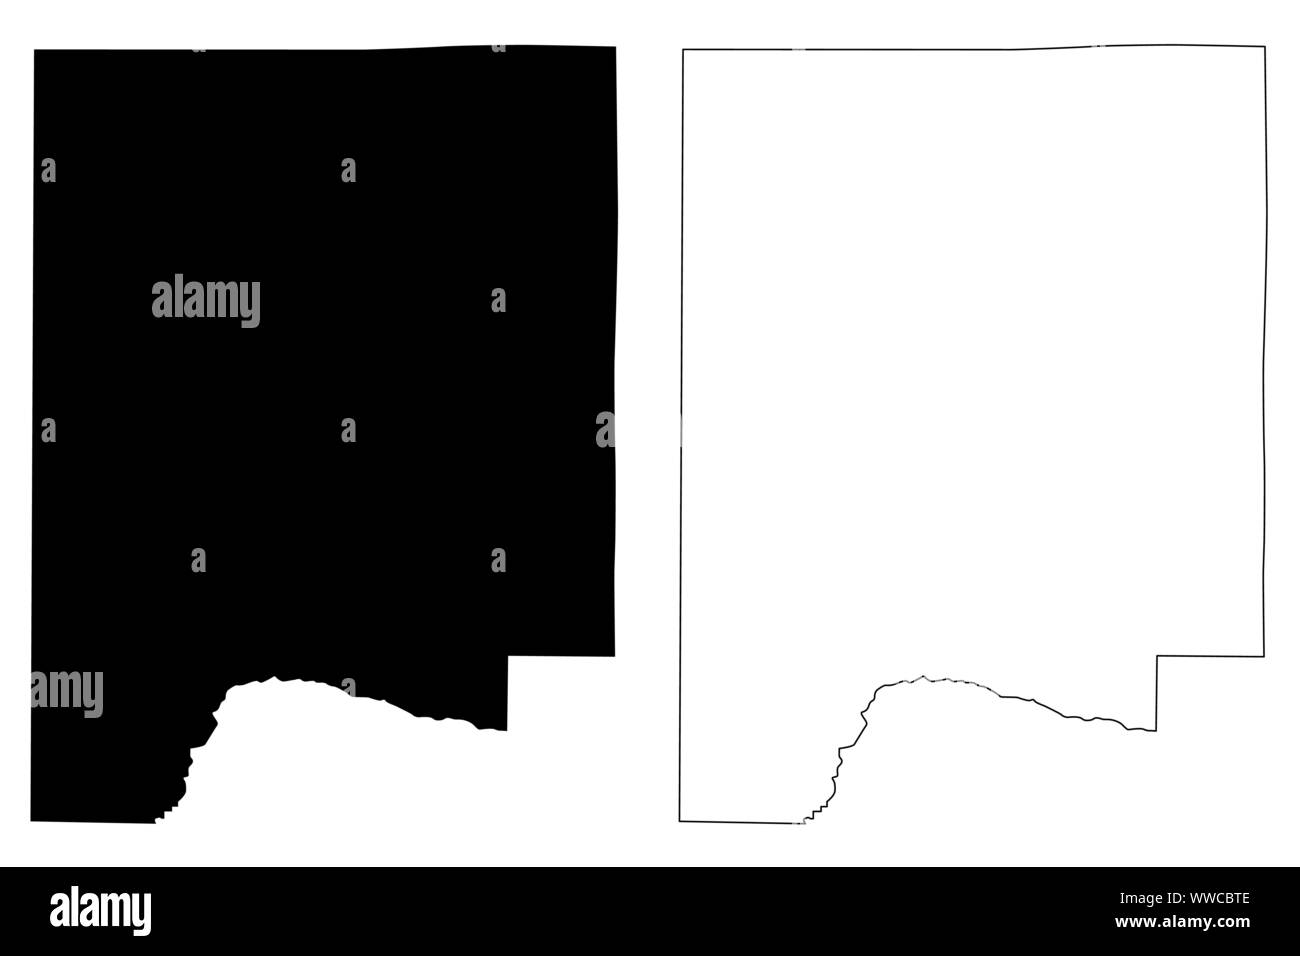 Dale County, Alabama (Grafschaften in Alabama, Vereinigte Staaten von Amerika, USA, USA, USA) Karte Vektor-illustration, kritzeln Skizze Dale Karte Stock Vektor